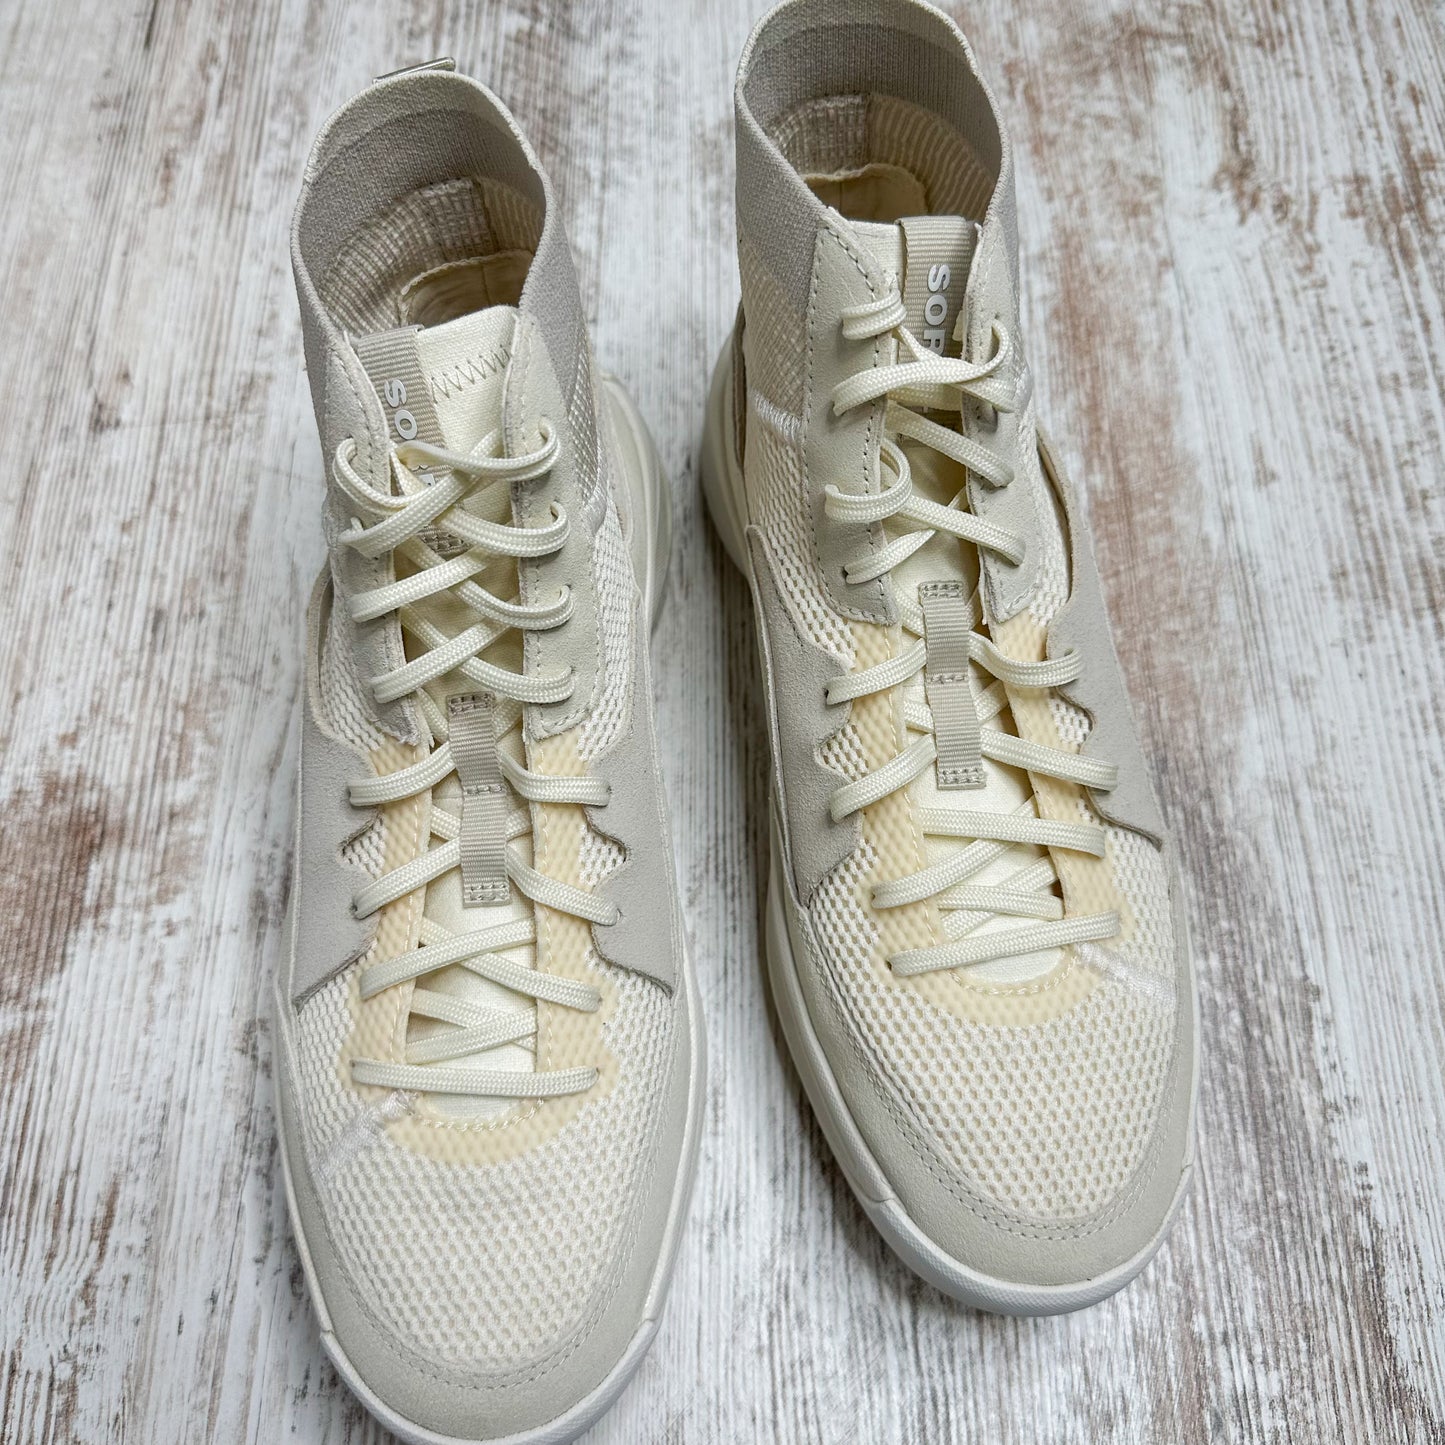 Sorel ONA 503 Knit Mid Sneakers Size 9.5